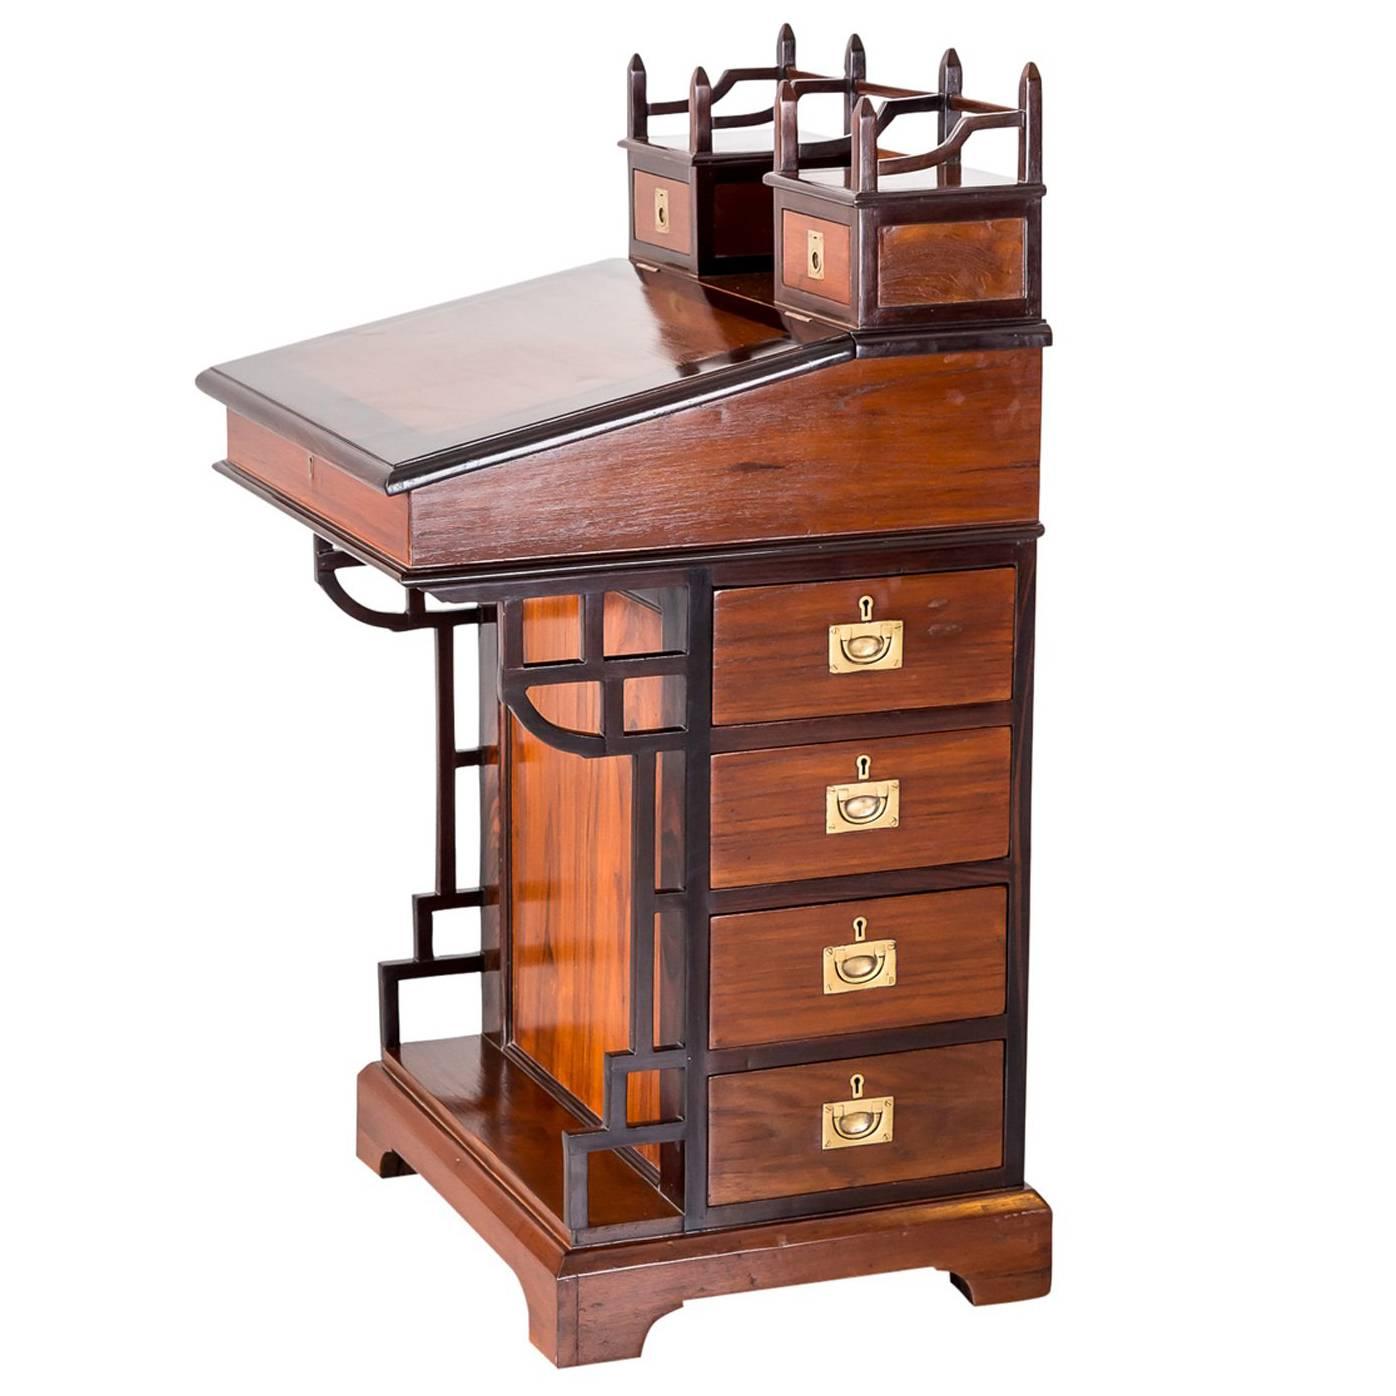 Antique Anglo-Indian or British Colonial Teakwood Davenport Desk For Sale